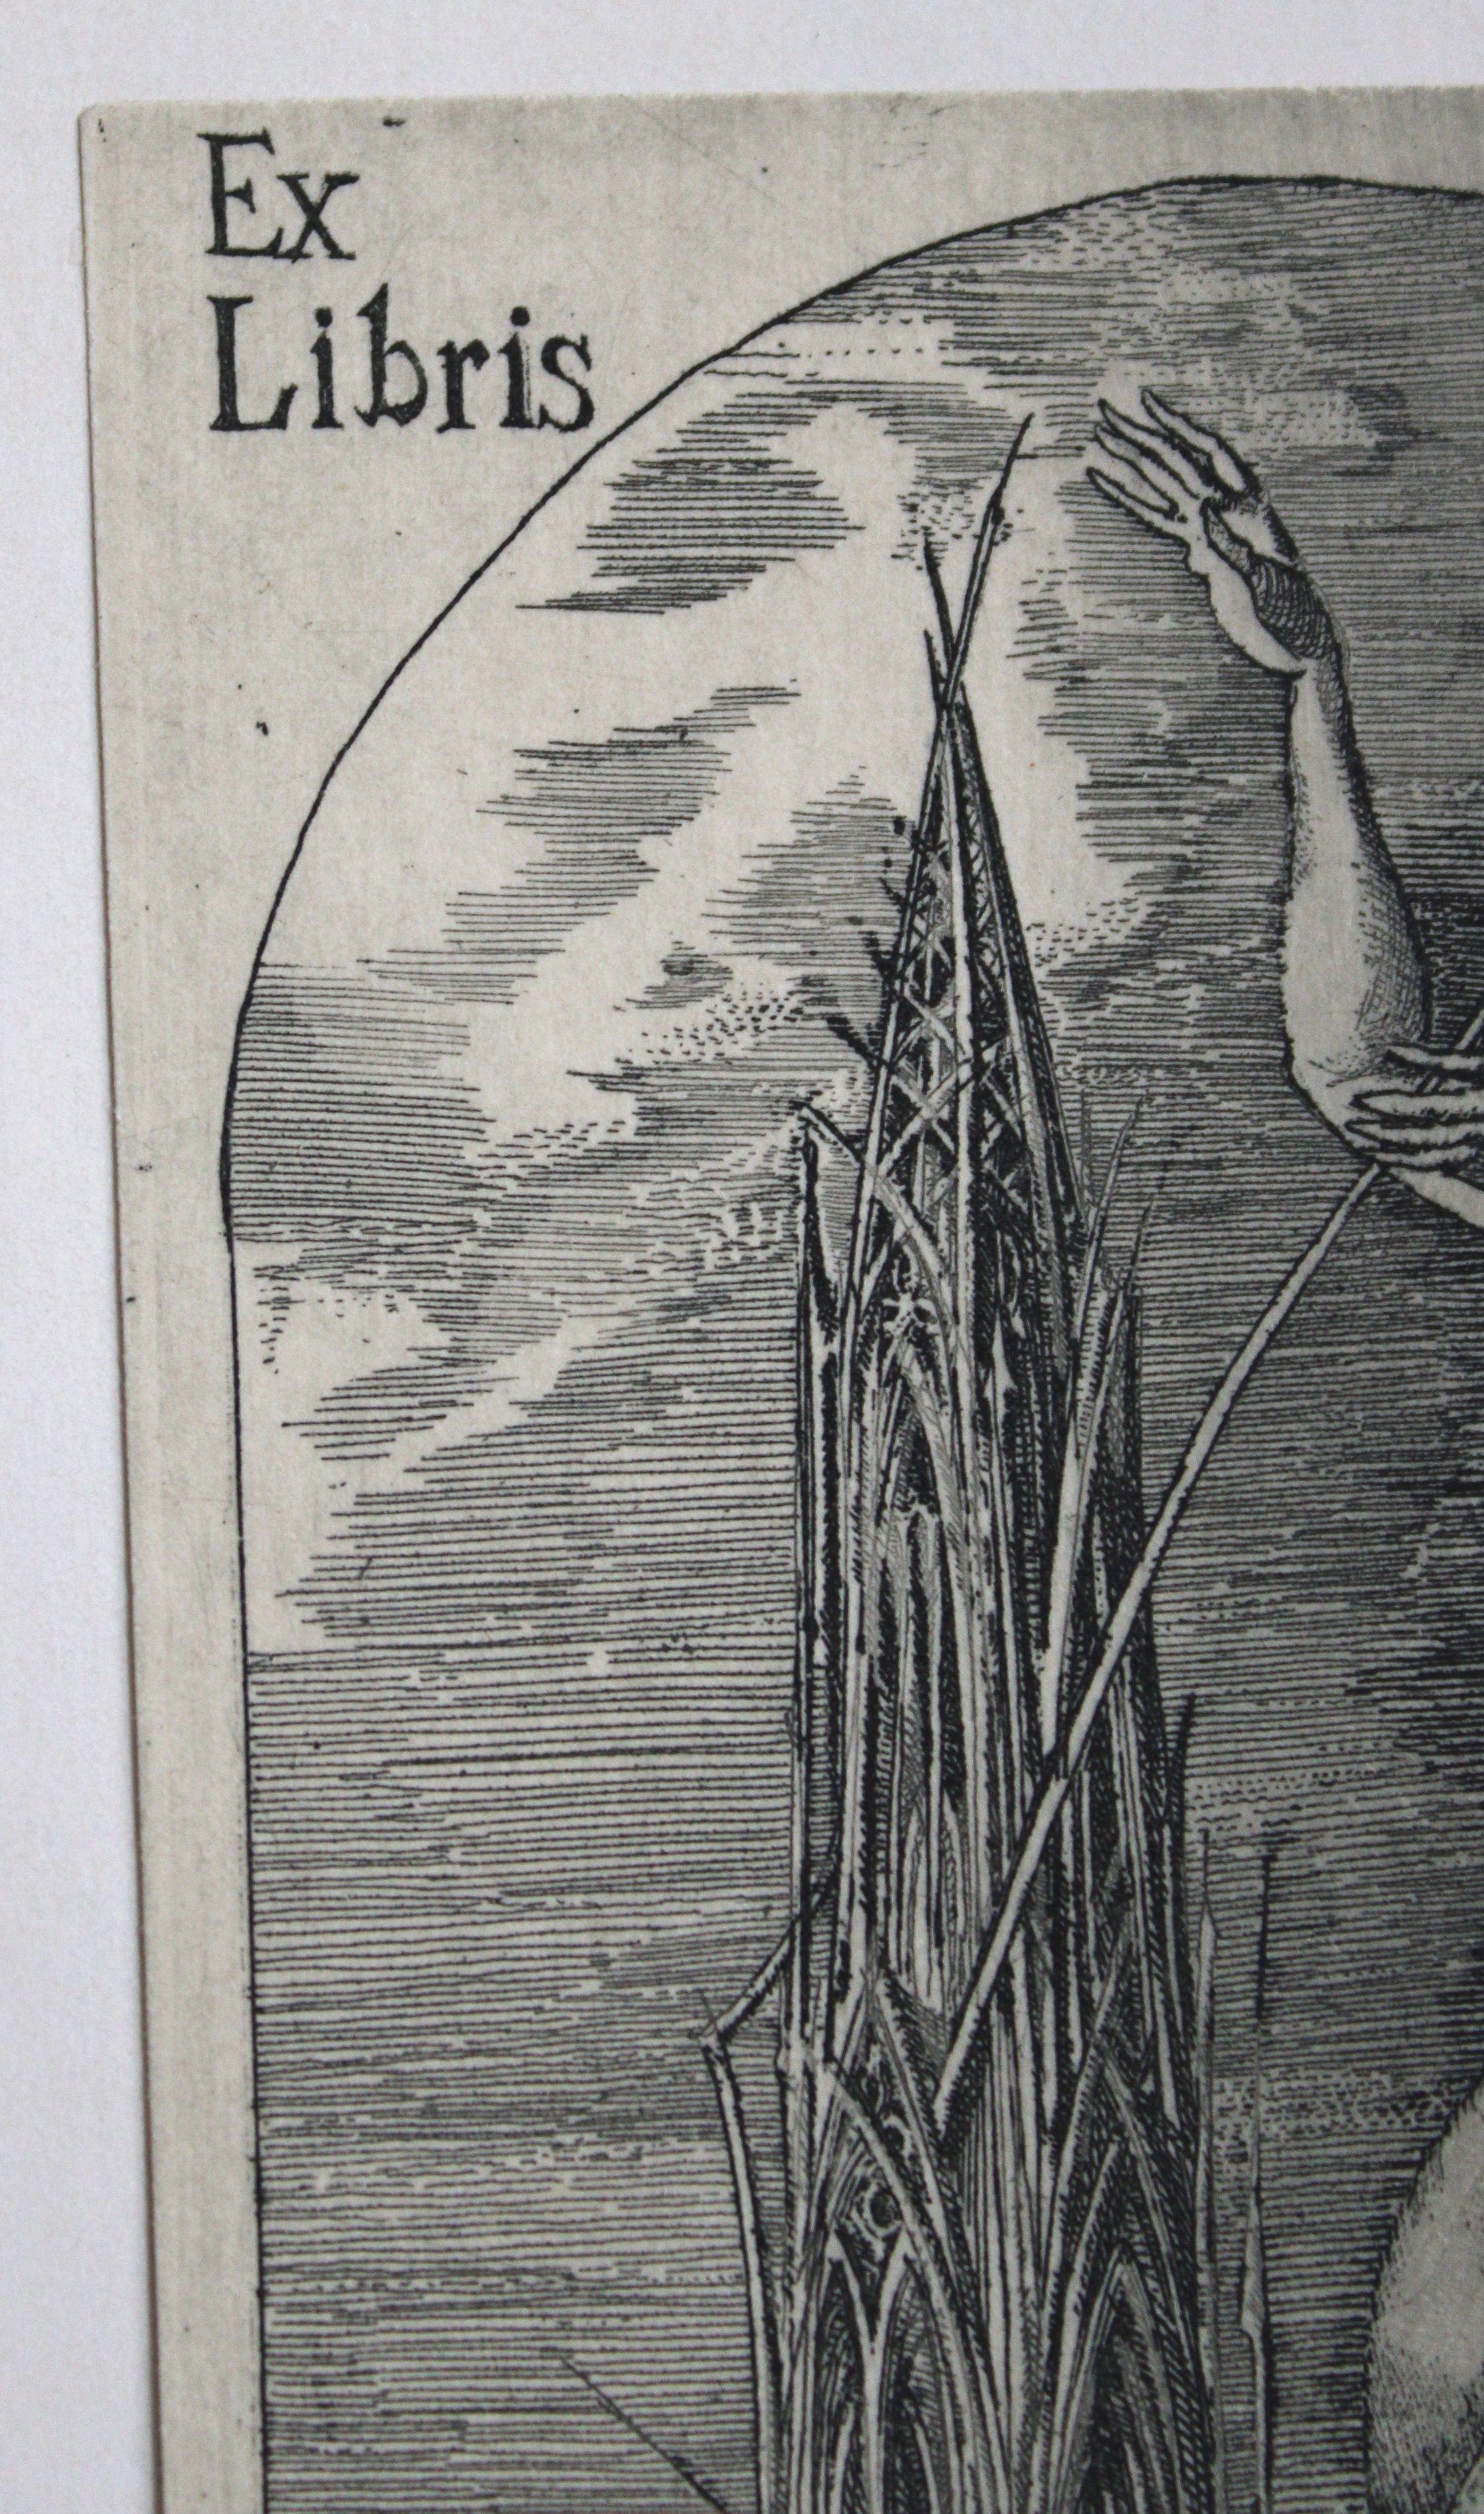 Ex libris Olav Tähe

Paper, woodcut, 11x7cm